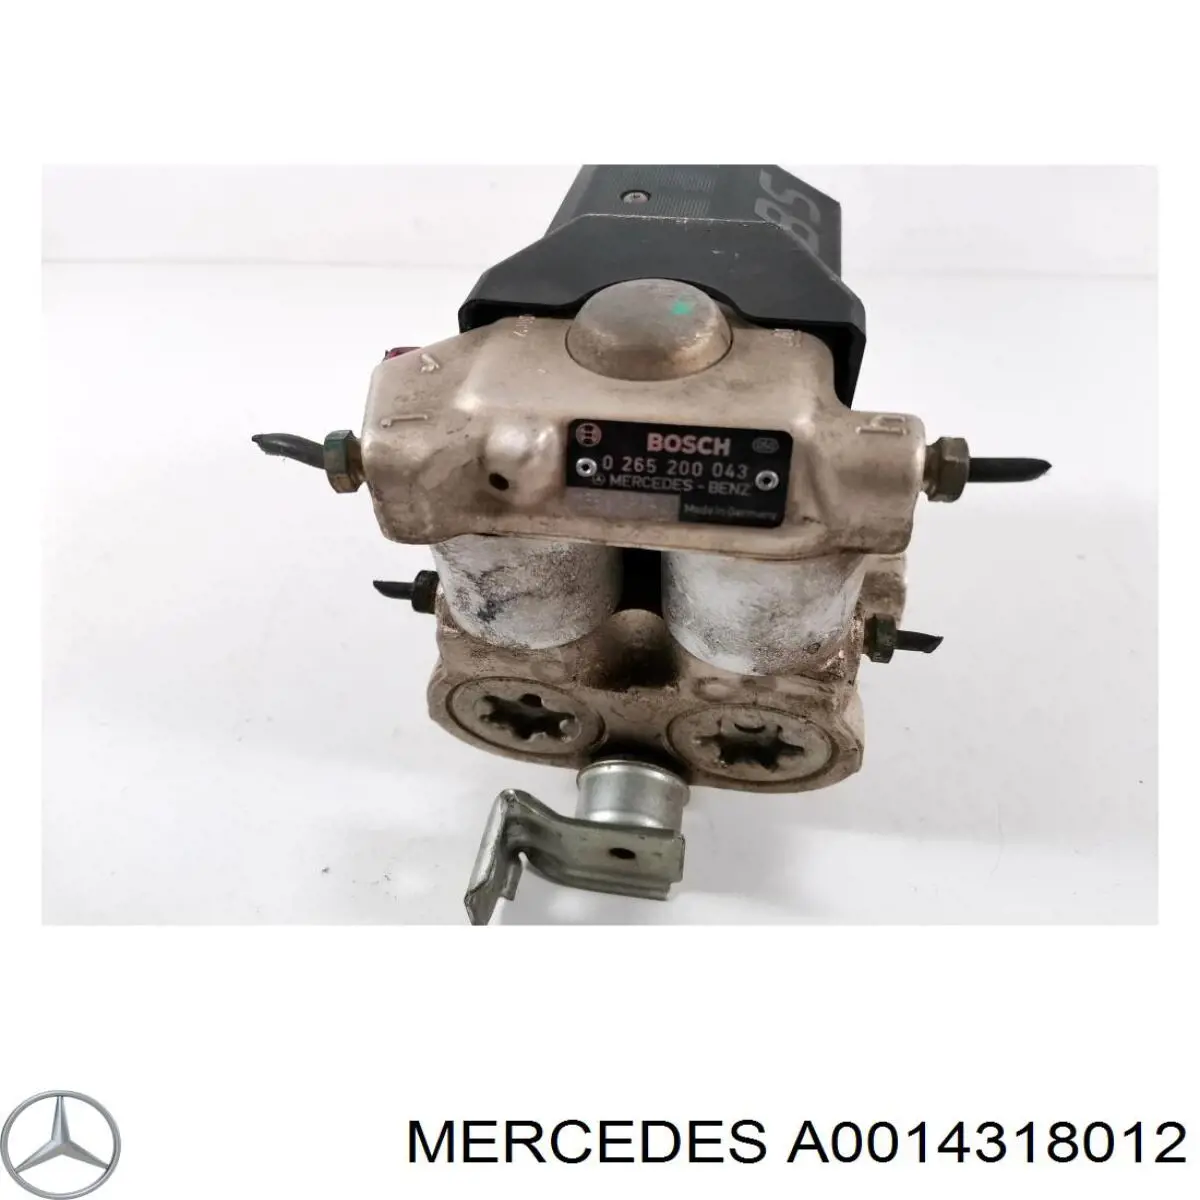 A0014318012 Mercedes блок управления абс (abs гидравлический)